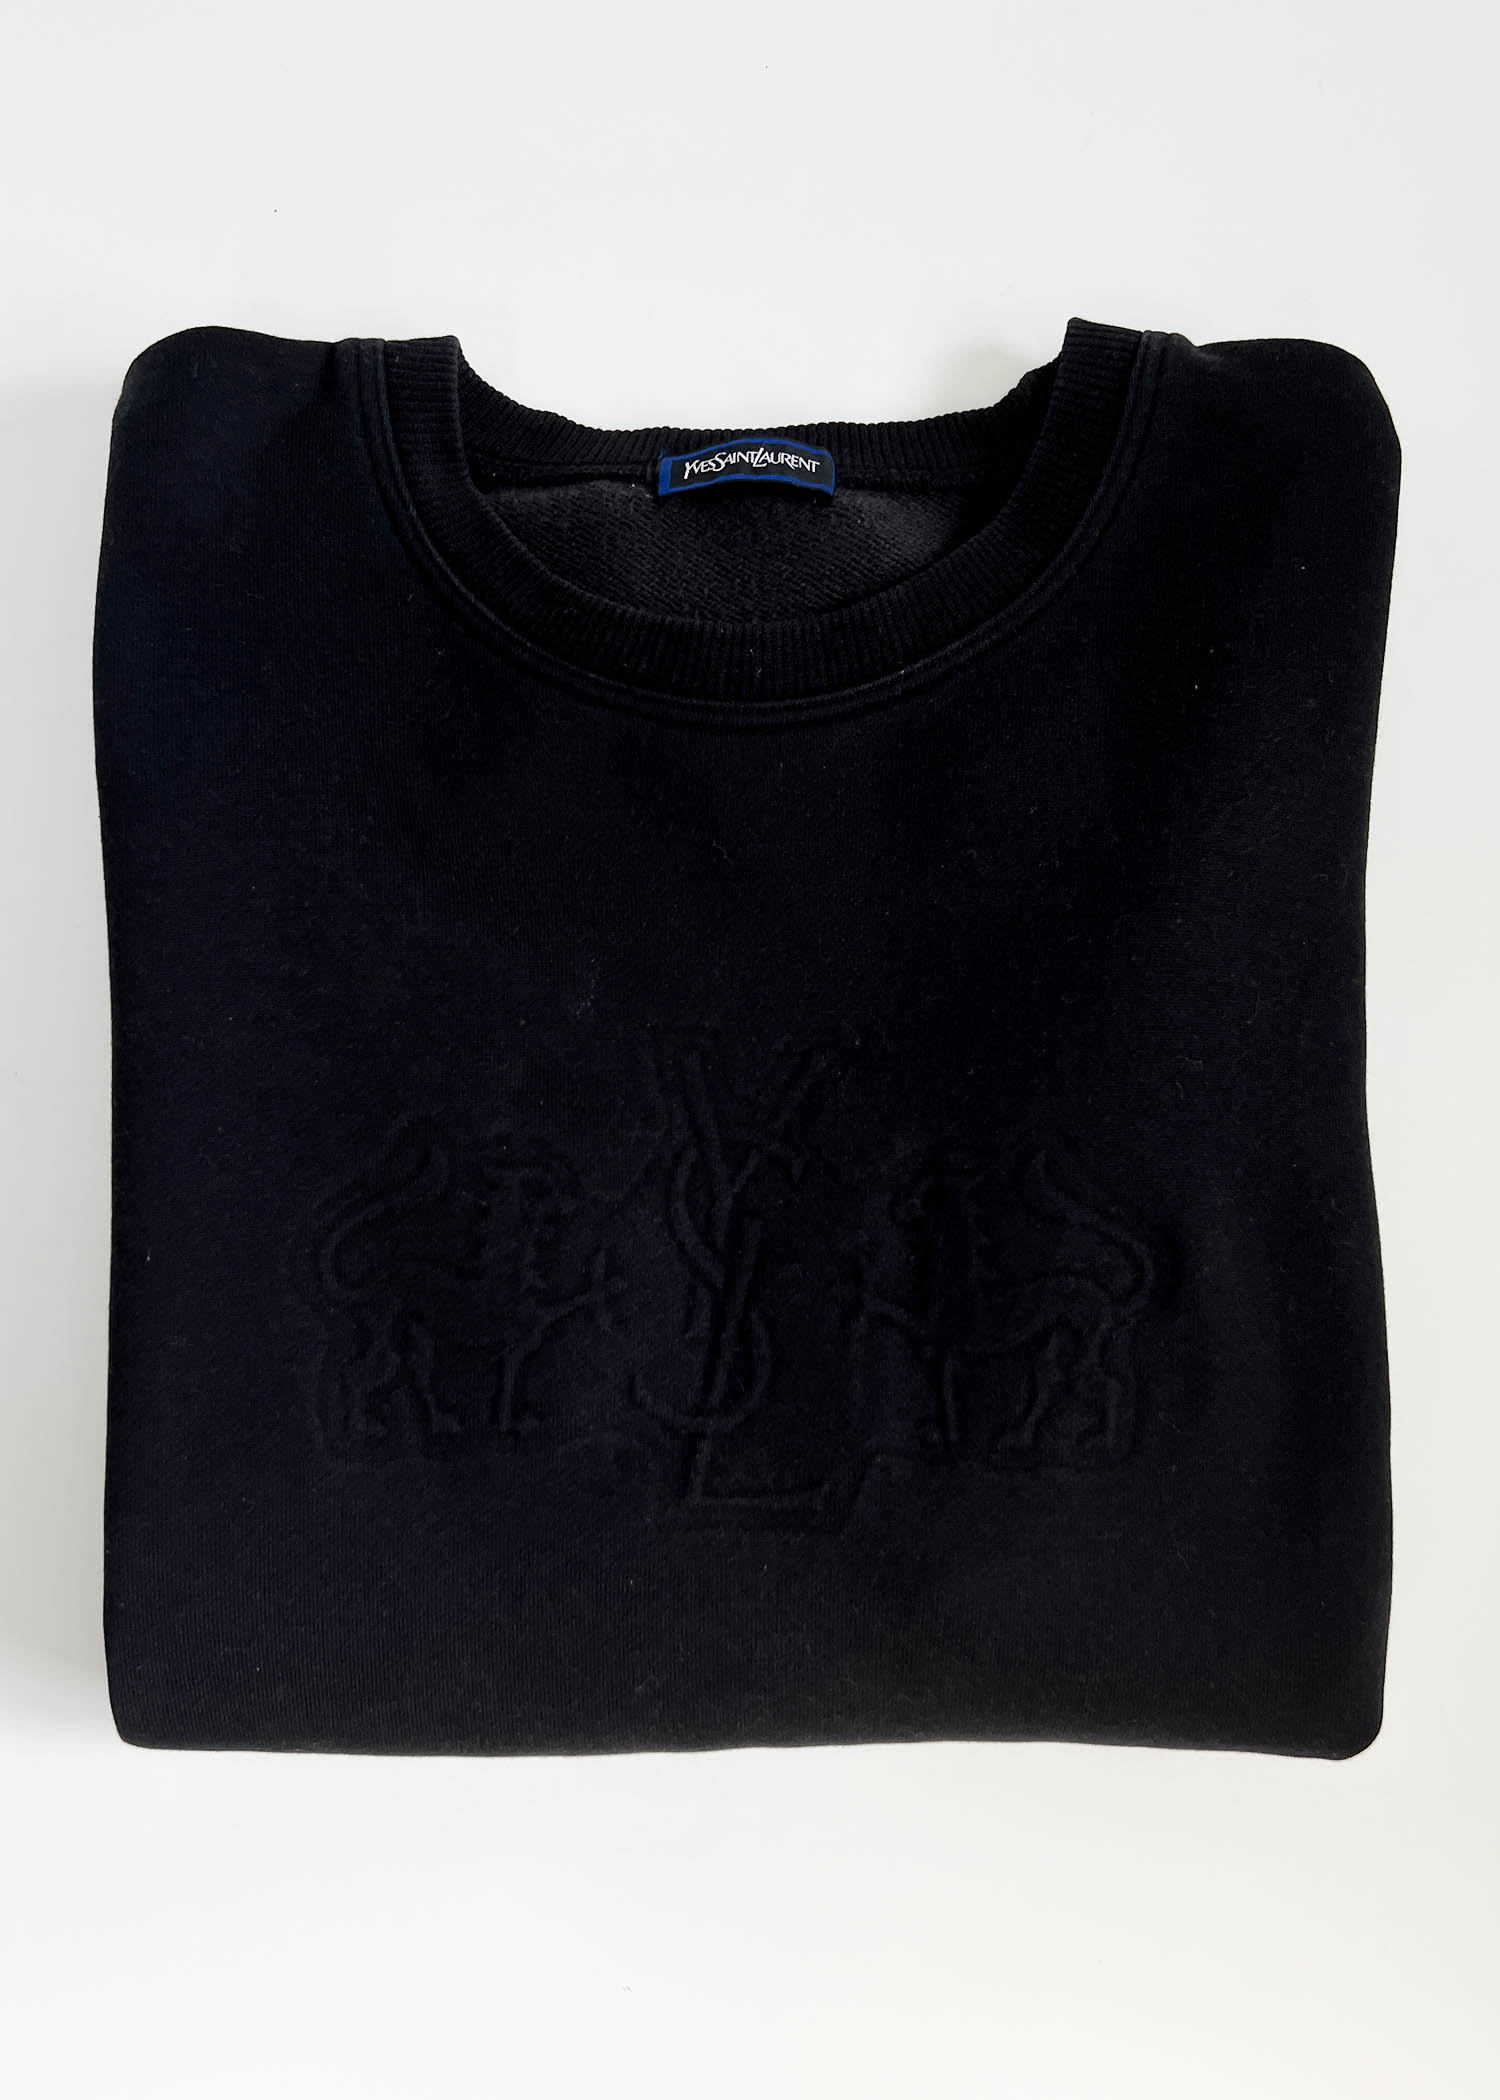 Yves Saint Laurent logo sweatshirts